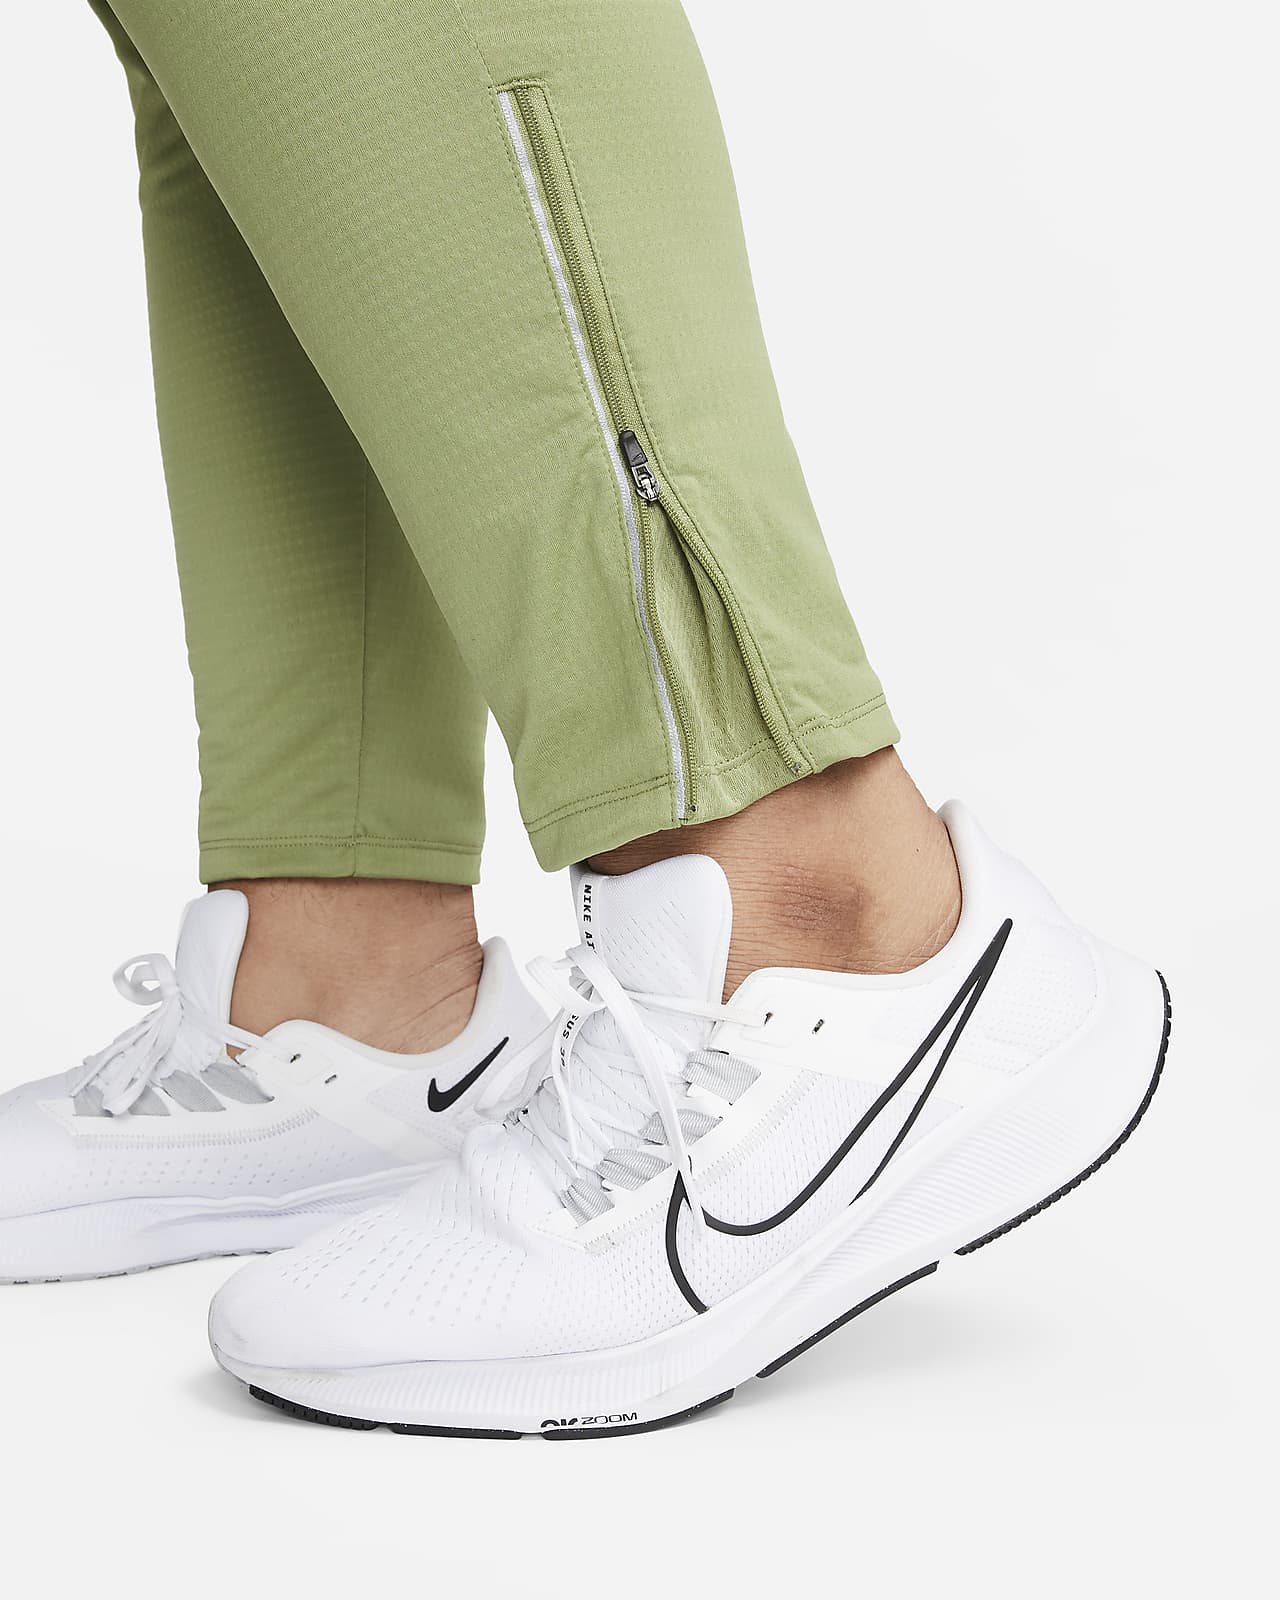 Nike Women's Flex Swift Running Pants